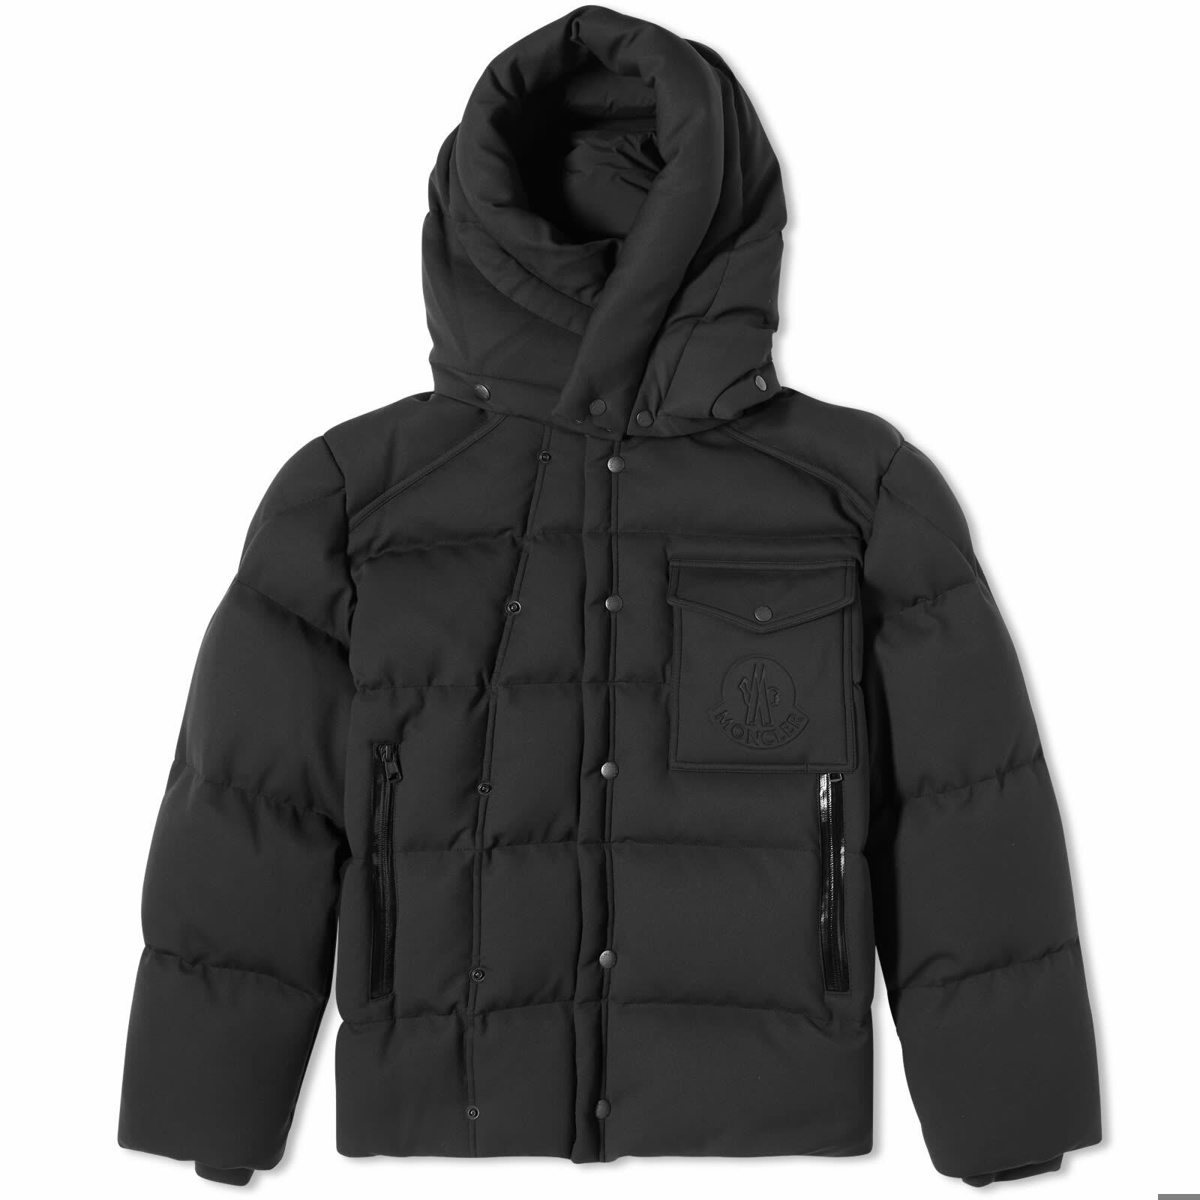 Moncler Men's Karakorum Down Filled Nylon Jacket in Black Moncler